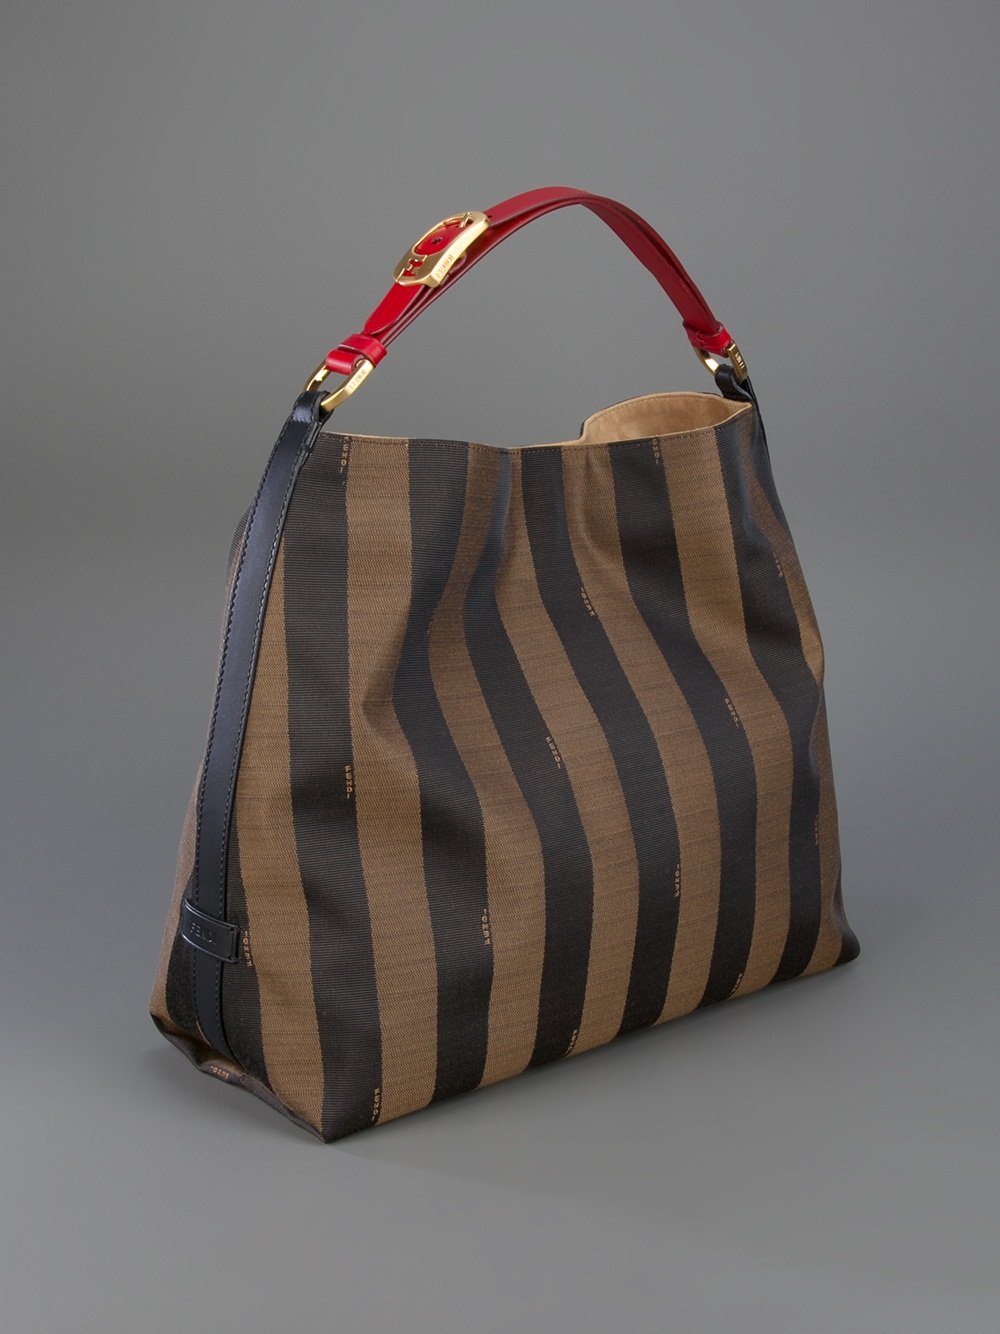 Fendi Pequin Bag in Brown - Lyst